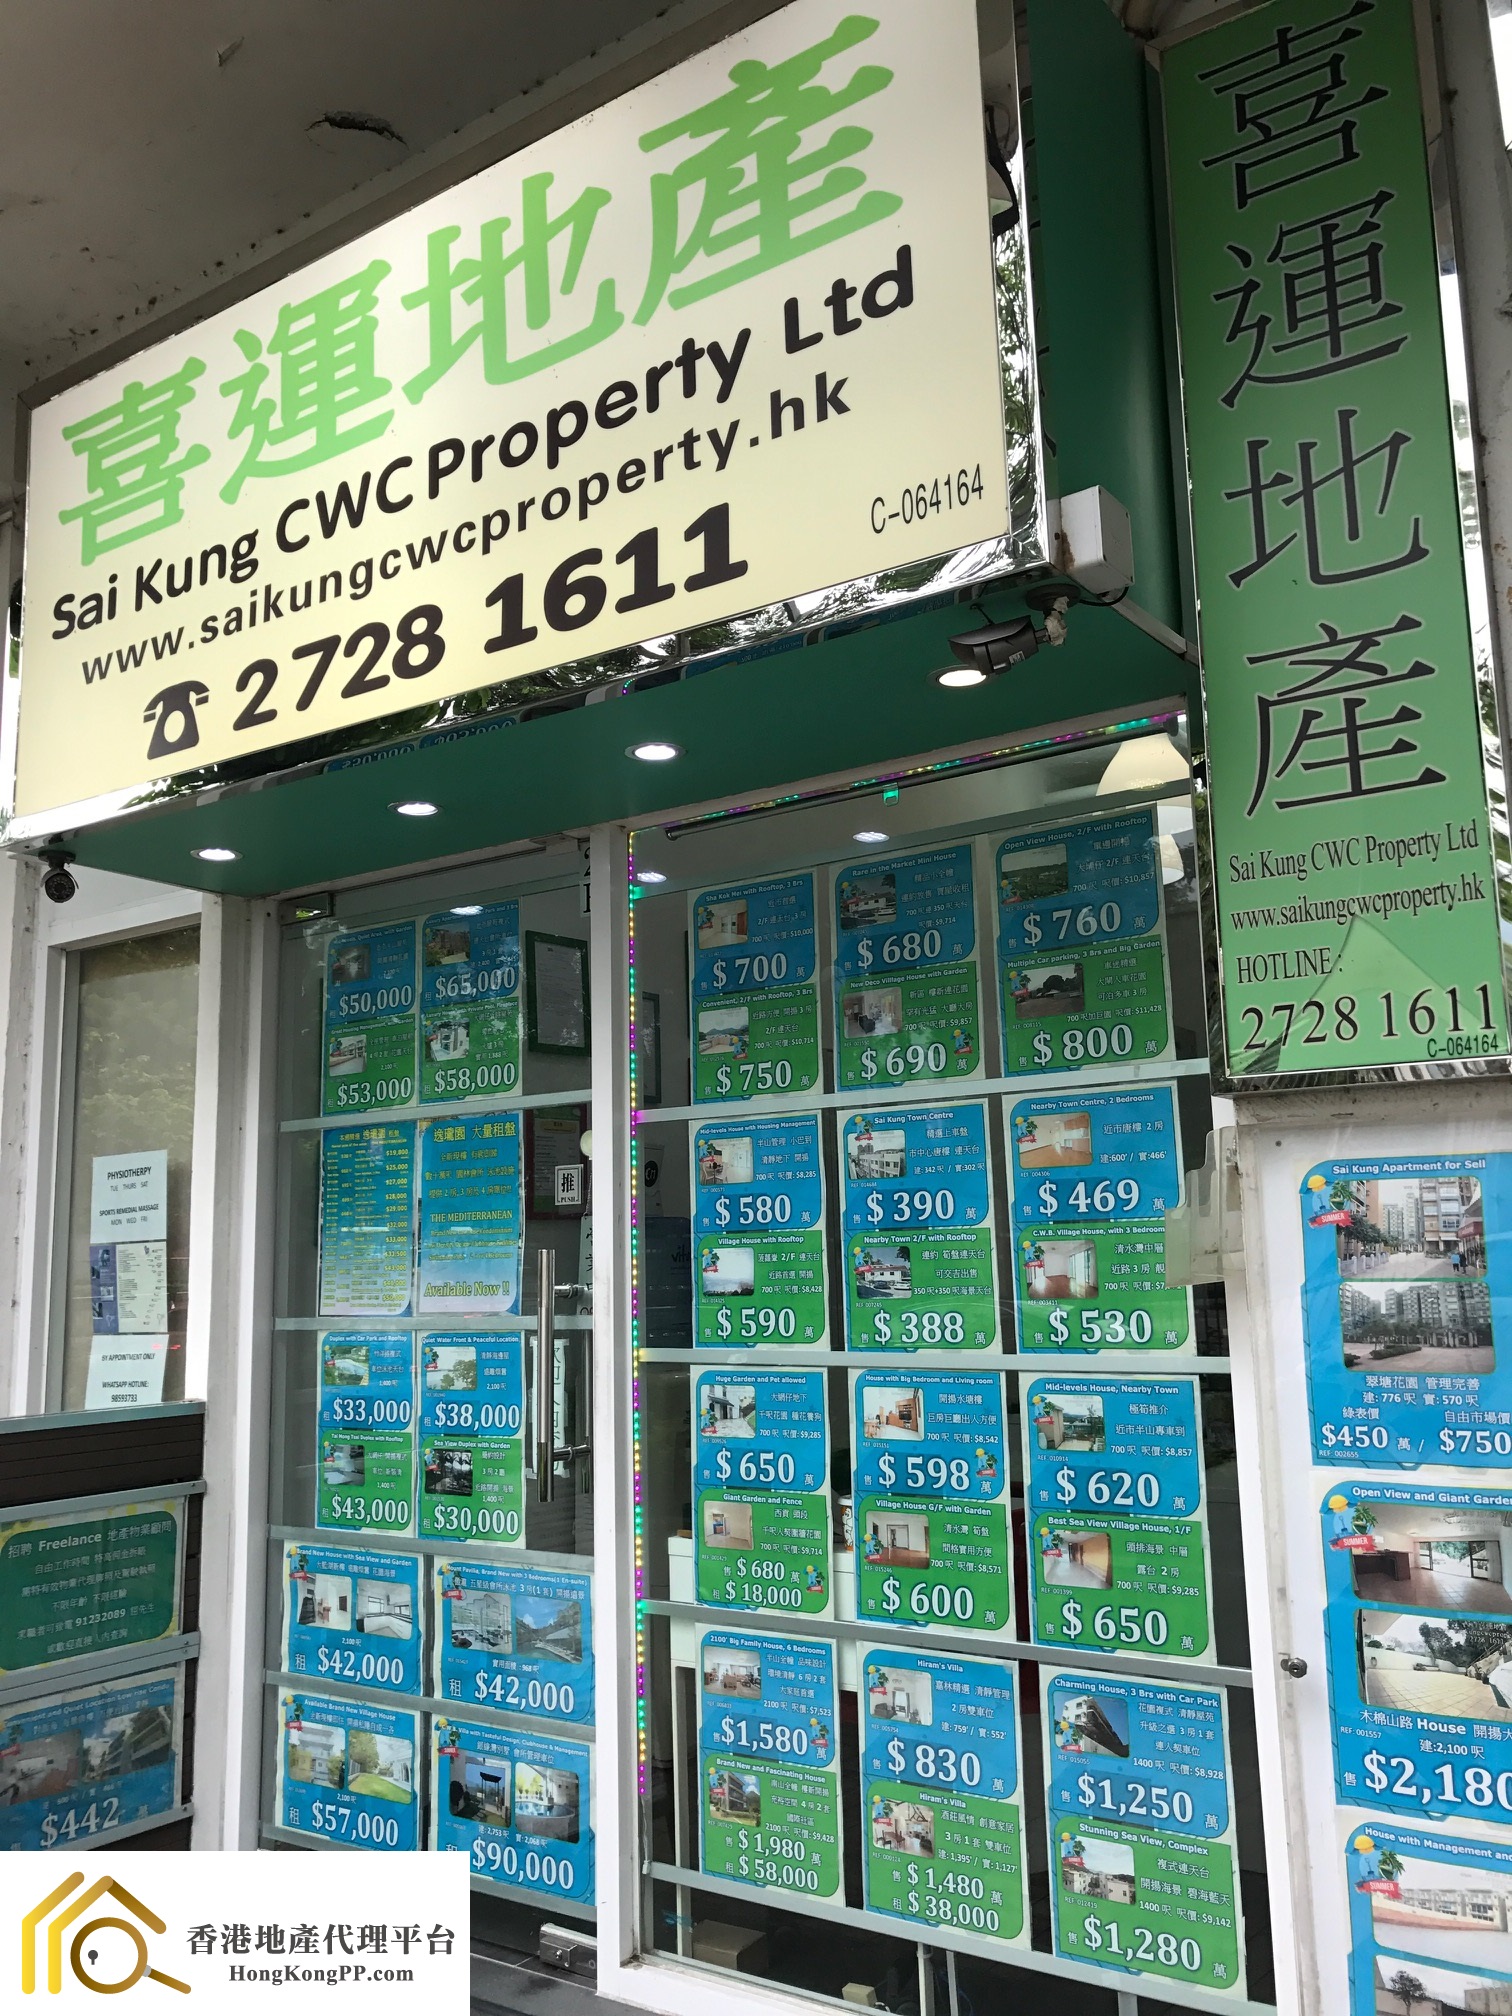 CarparkEstate Agent: 西貢喜運地產  Sai Kung CWC Property